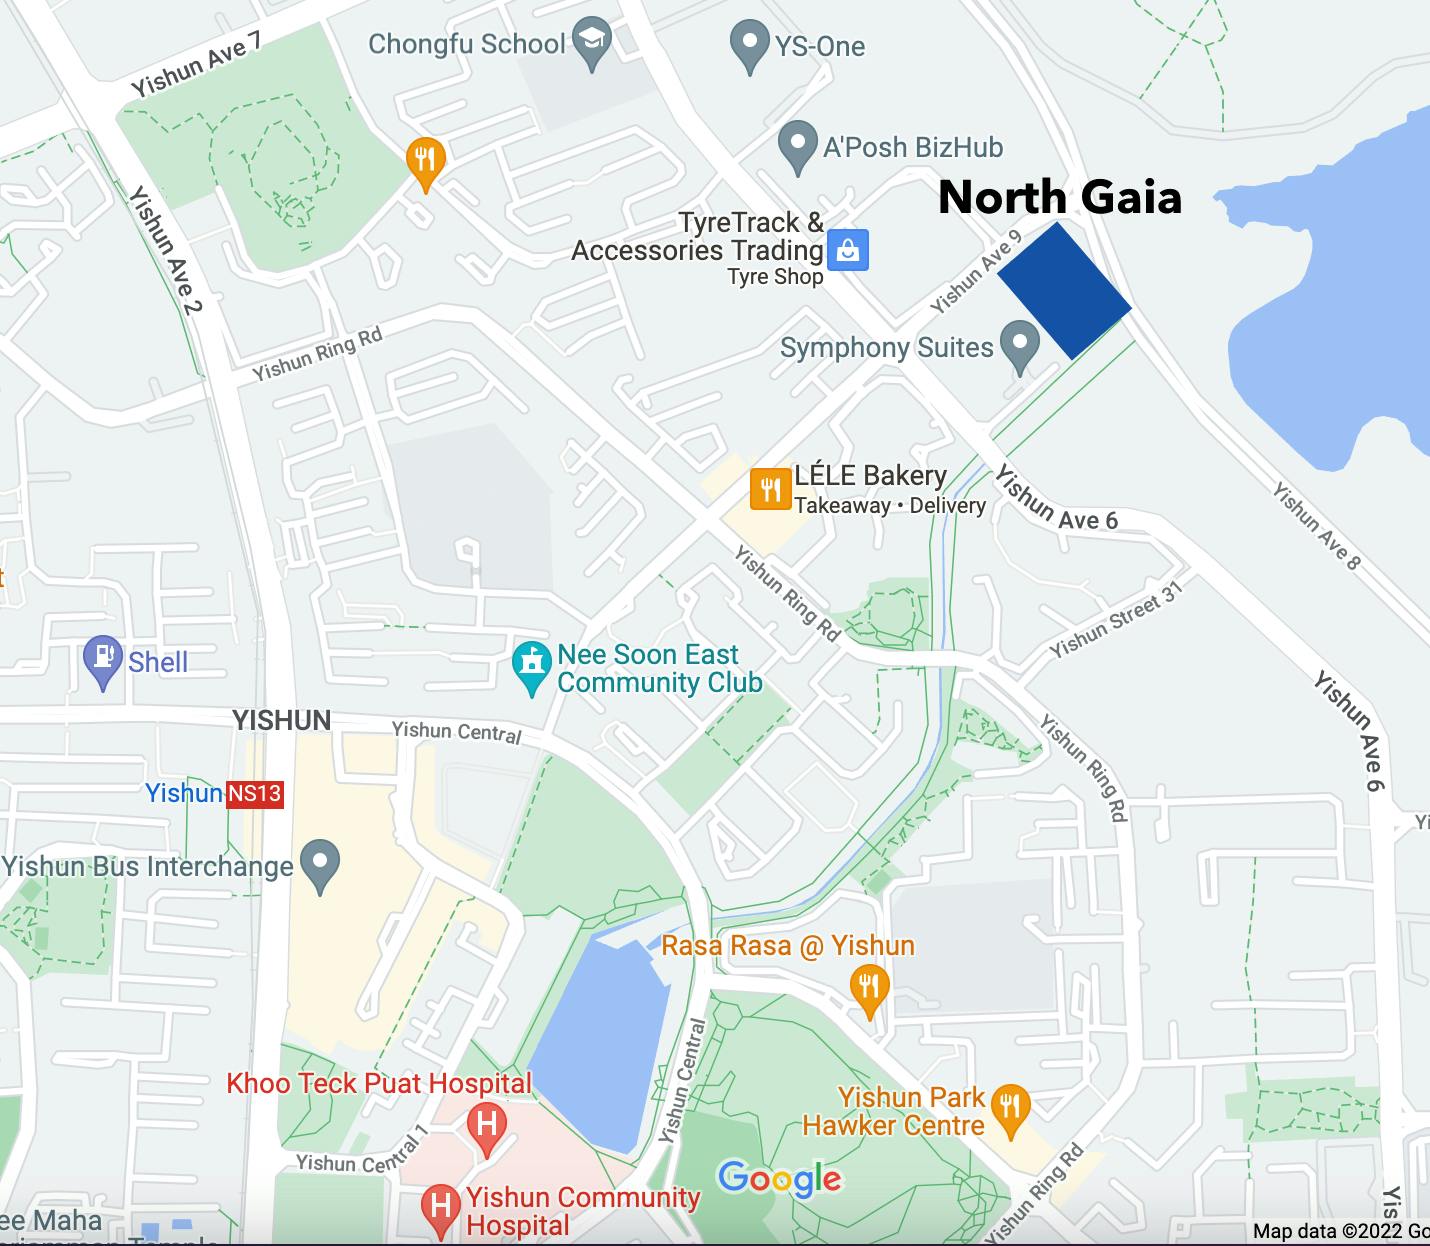 north gaia location on google maps